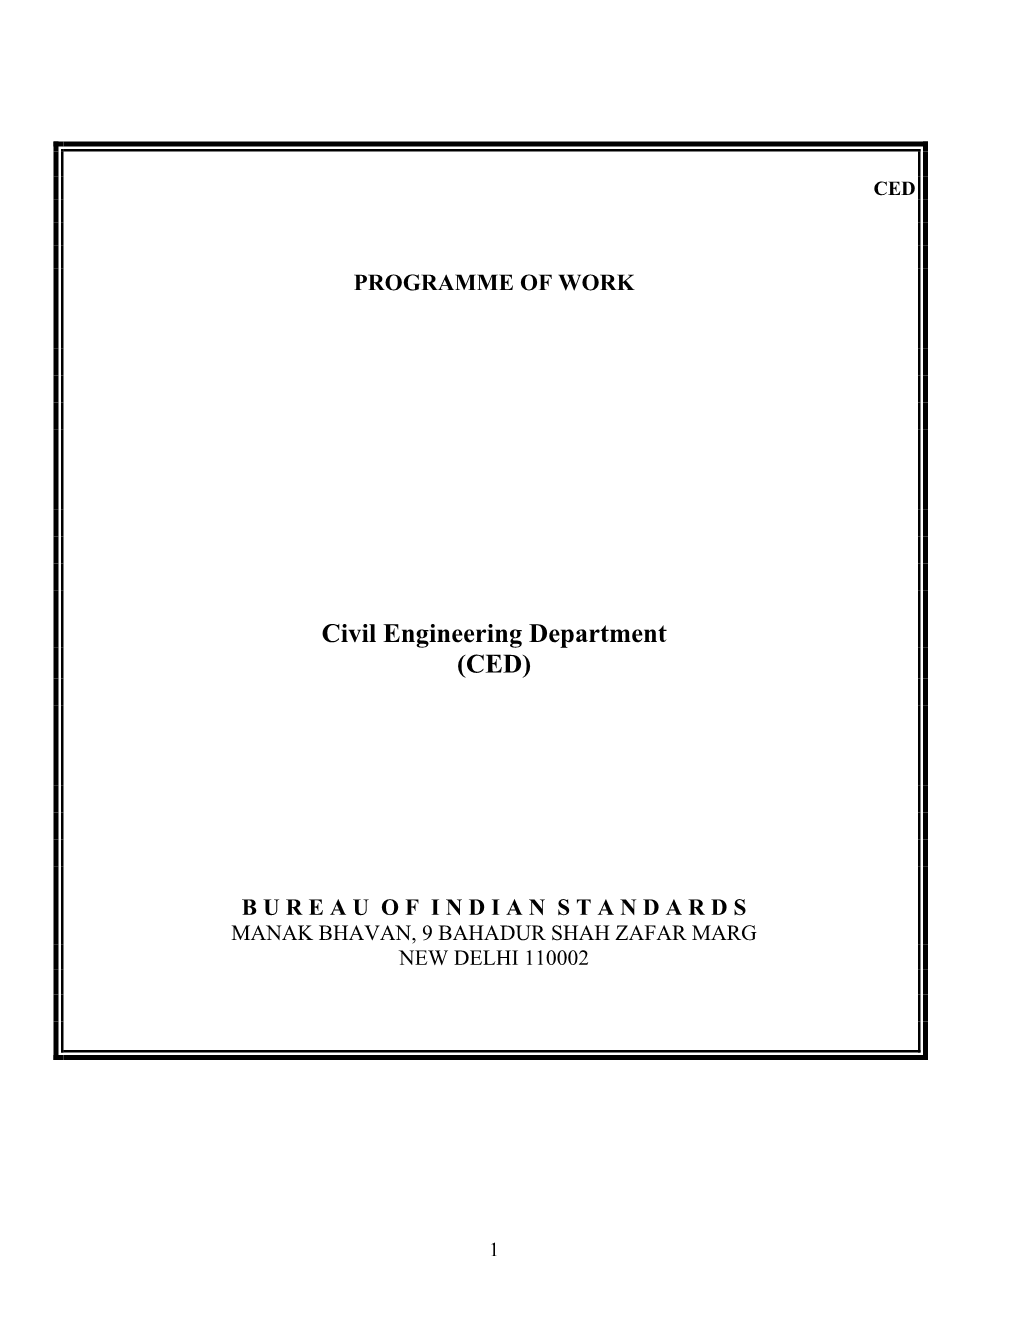 Civil Engineering Department (CED)